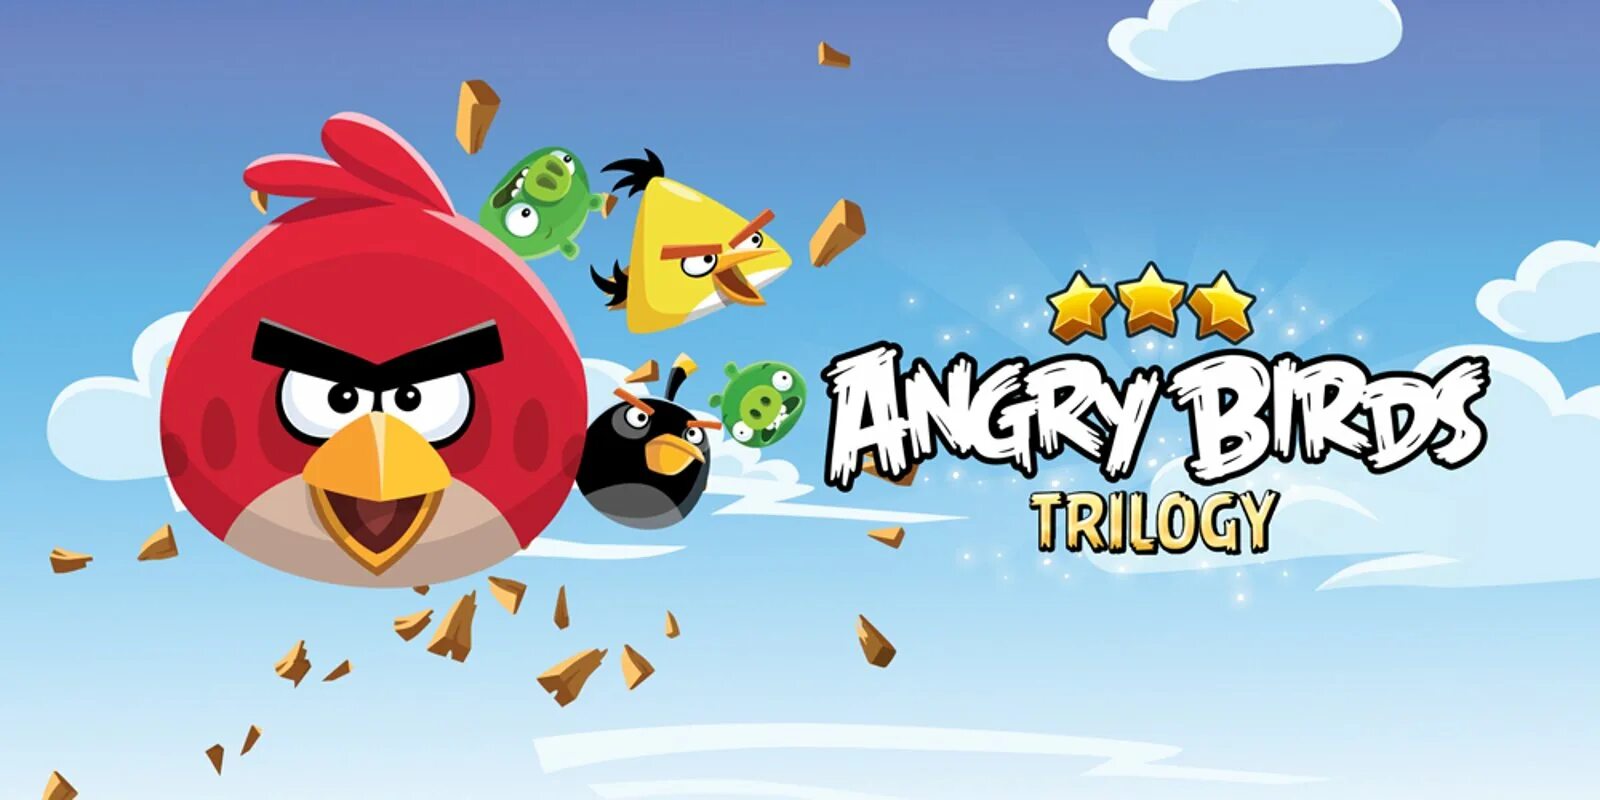 Angry birds store. Игра Angry Birds Trilogy. Энгри бердз 2009. Ровио Энгри бердз. Angry Birds первая игра.